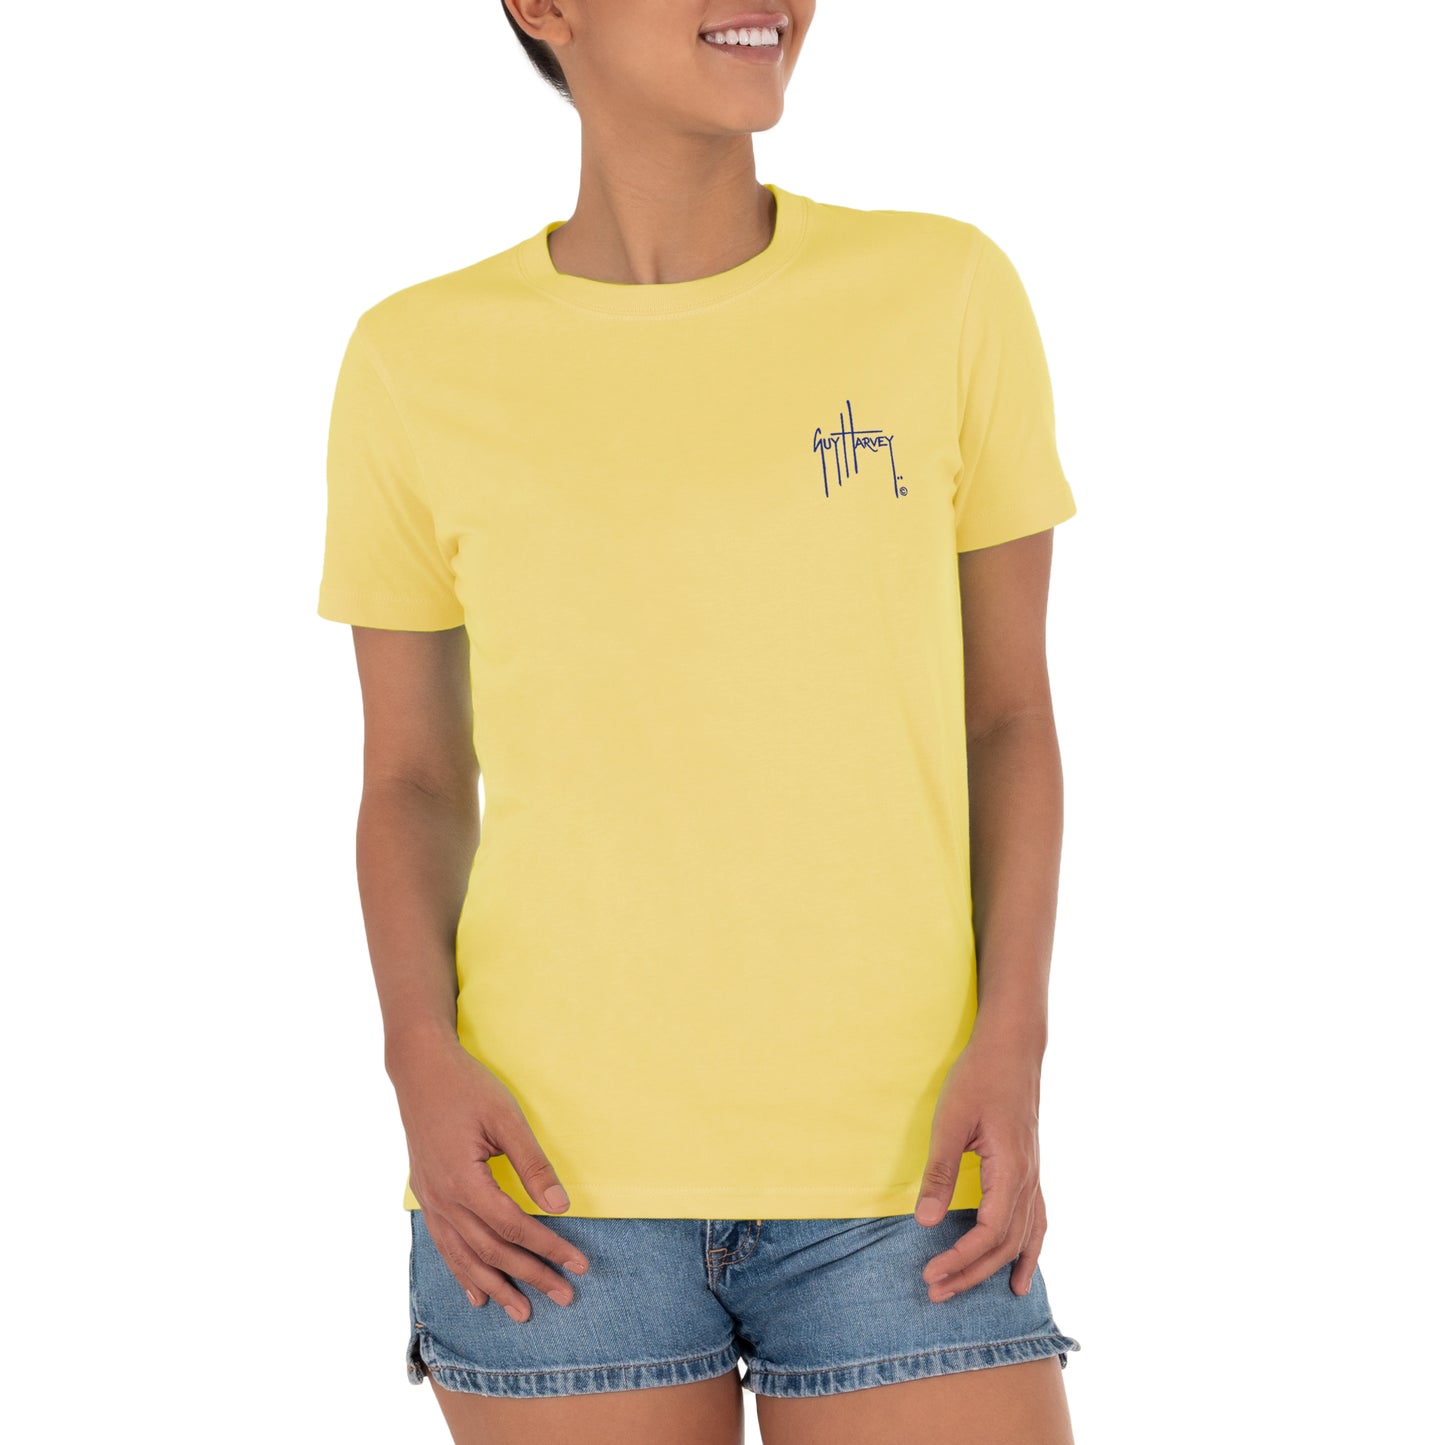 Ladies Tropic Short Sleeve Yellow T-Shirt View 5